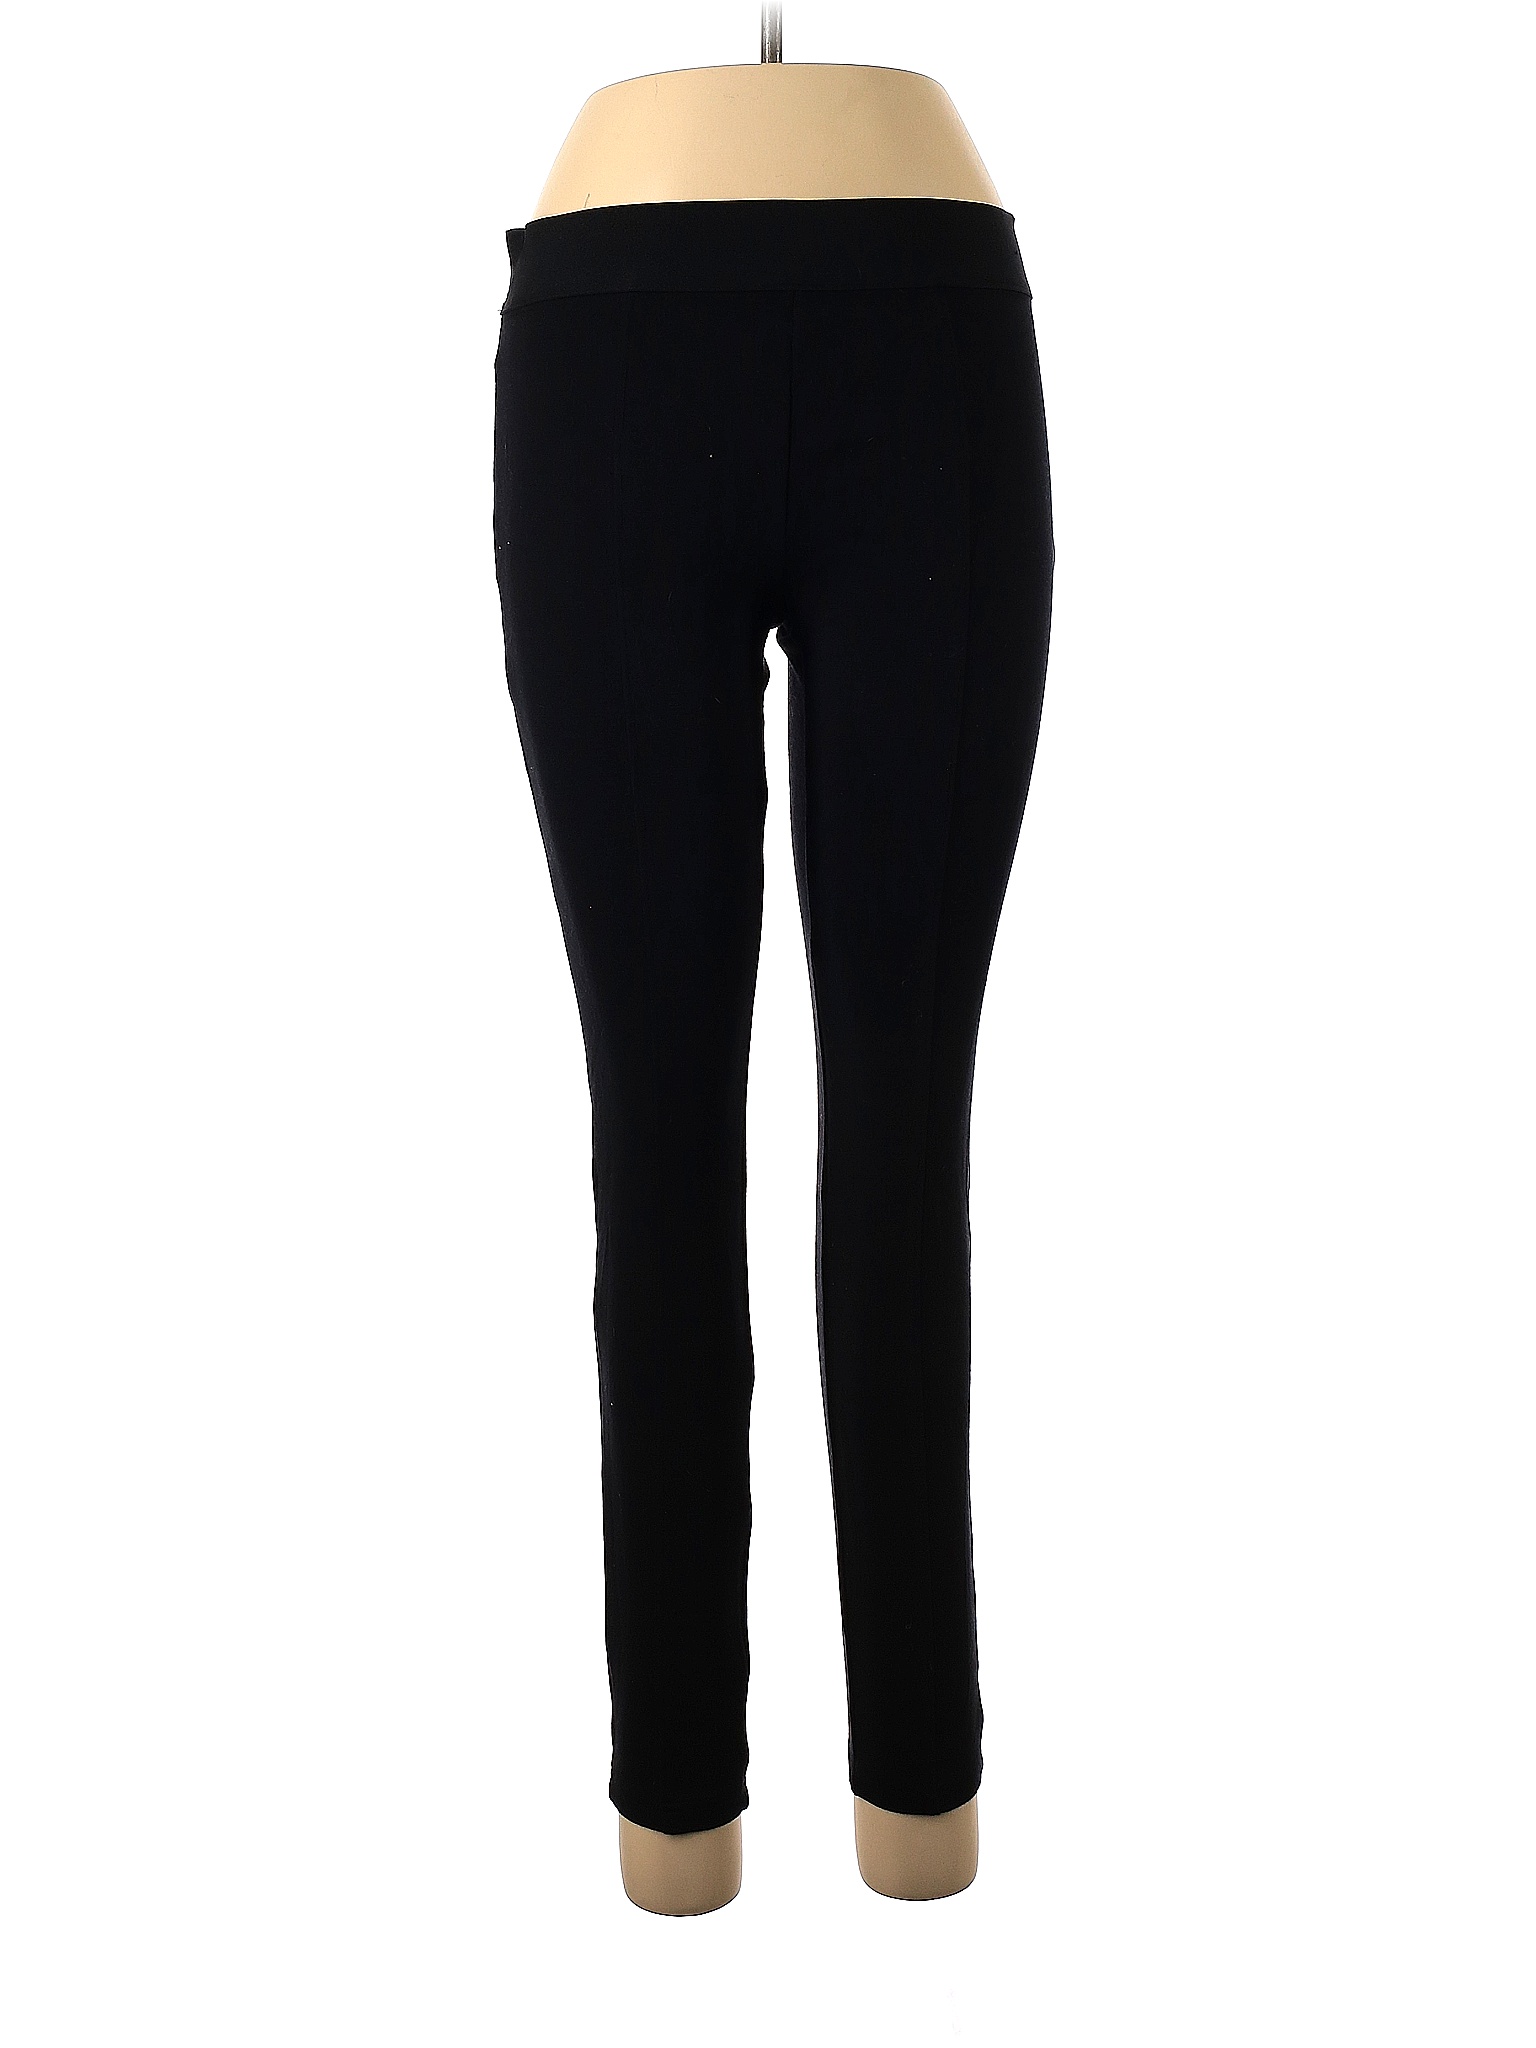 Hue Black Casual Pants Size L - 89% off | thredUP